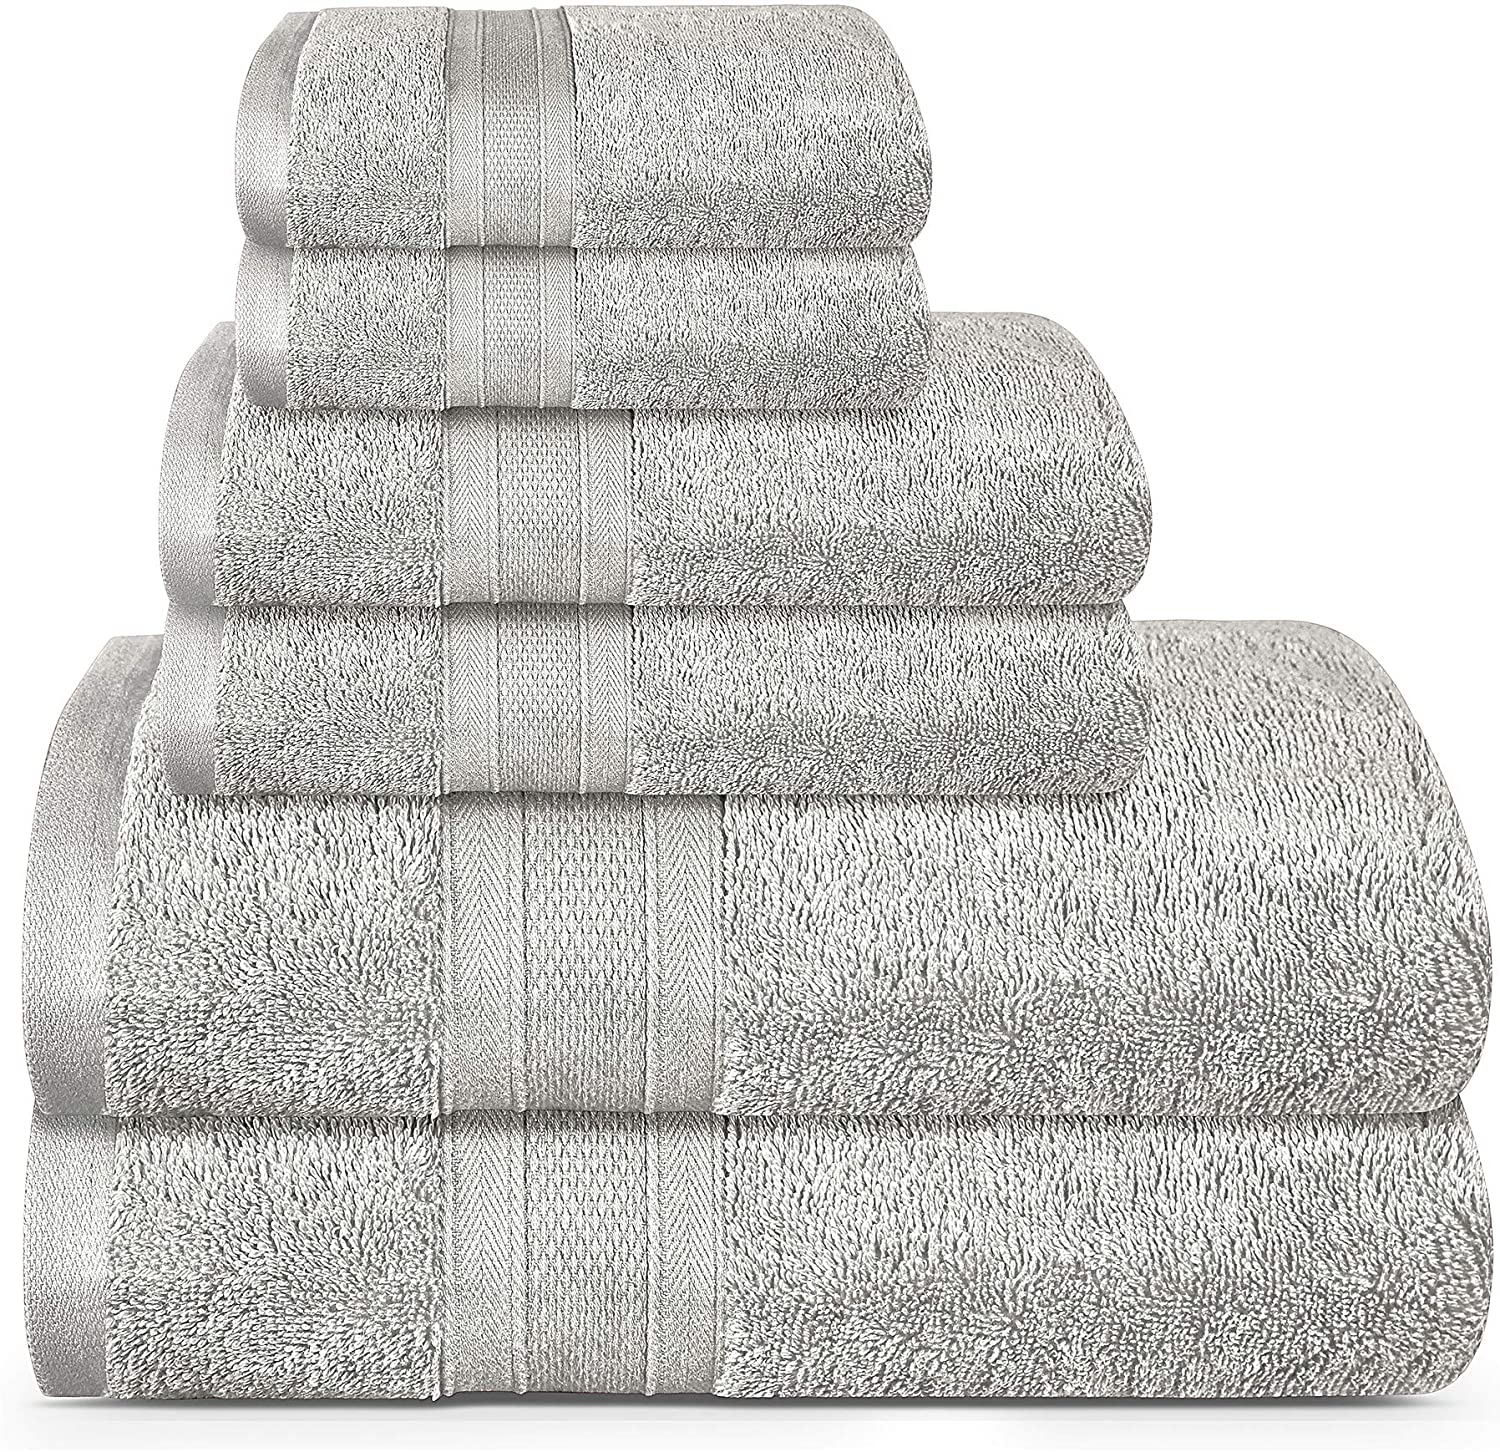 TRIDENT OEKO-TEX Certified Soft Towel Set, 6-Piece